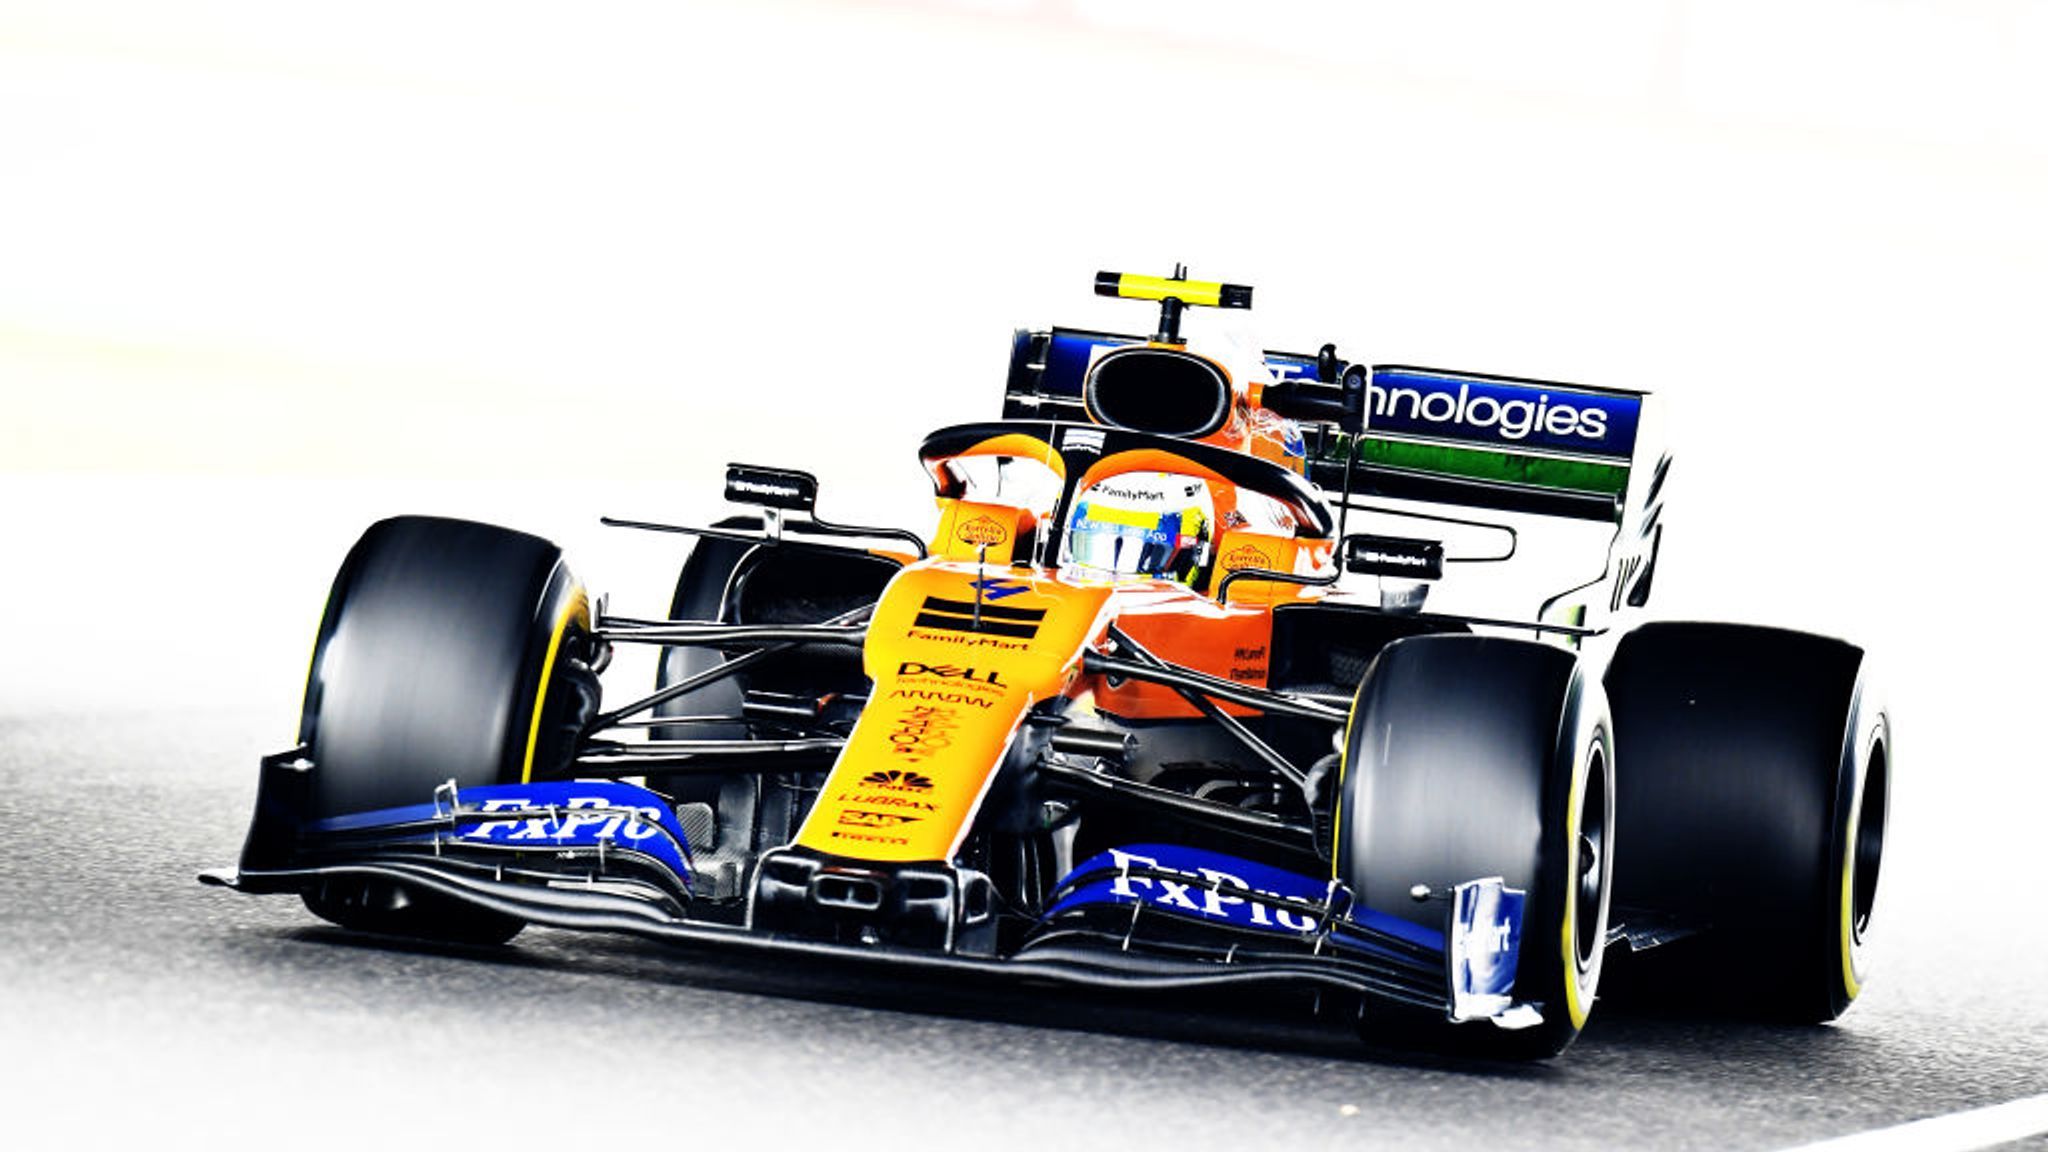 McLaren reveal F1 car launch date after Lando Norris 'slip'